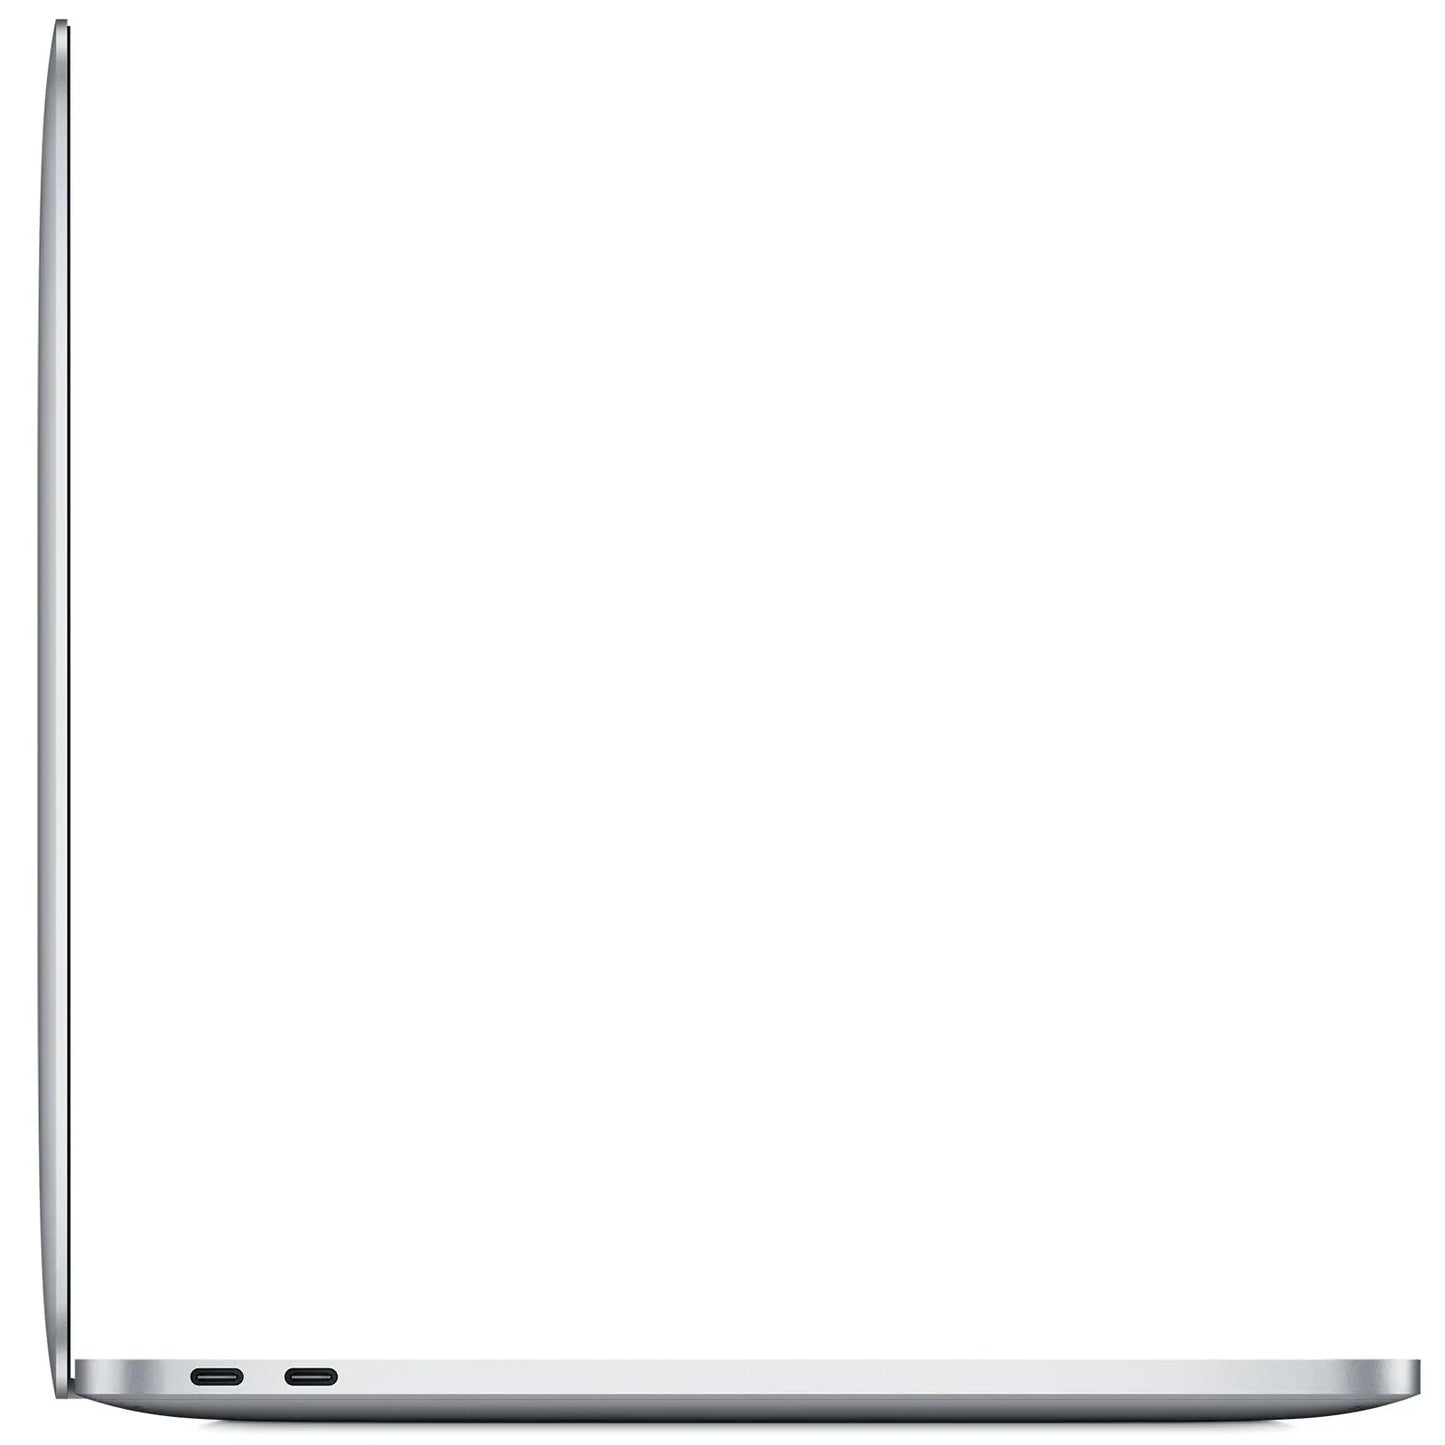 APPLE MacBook Pro MPXR2FN/A 13 Pouces Intel Dual Core i5 - Stockage 128Go - Argent 0190198393319 Apple Computer, Inc